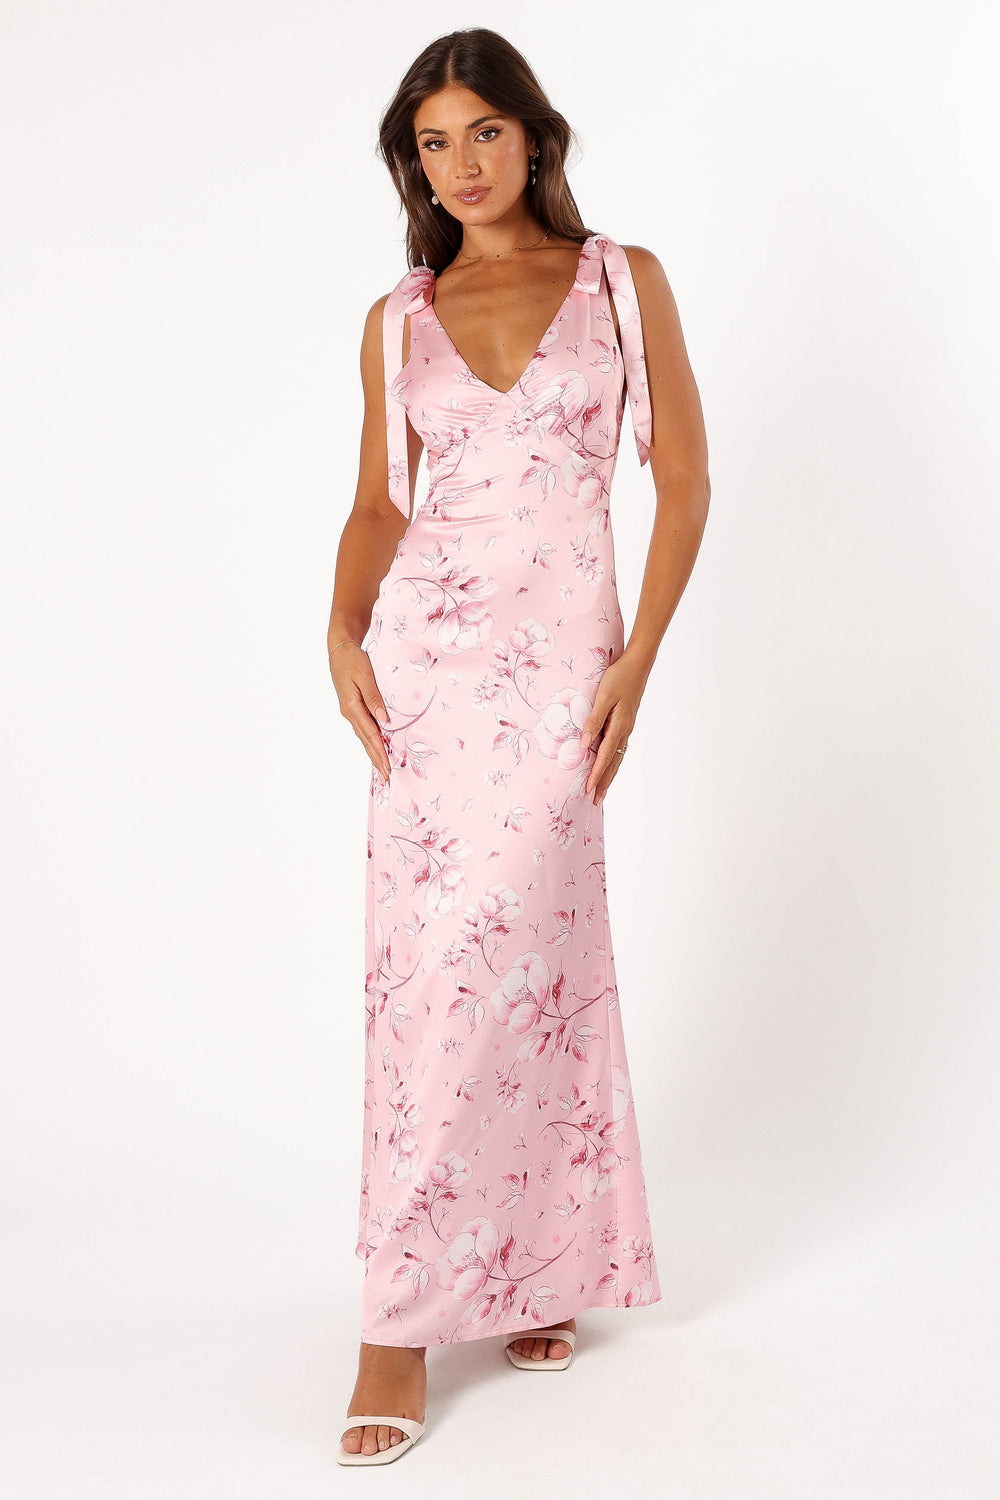 Petal and Pup USA DRESSES Xavier Bow Shoulder Maxi Dress - Pink Floral